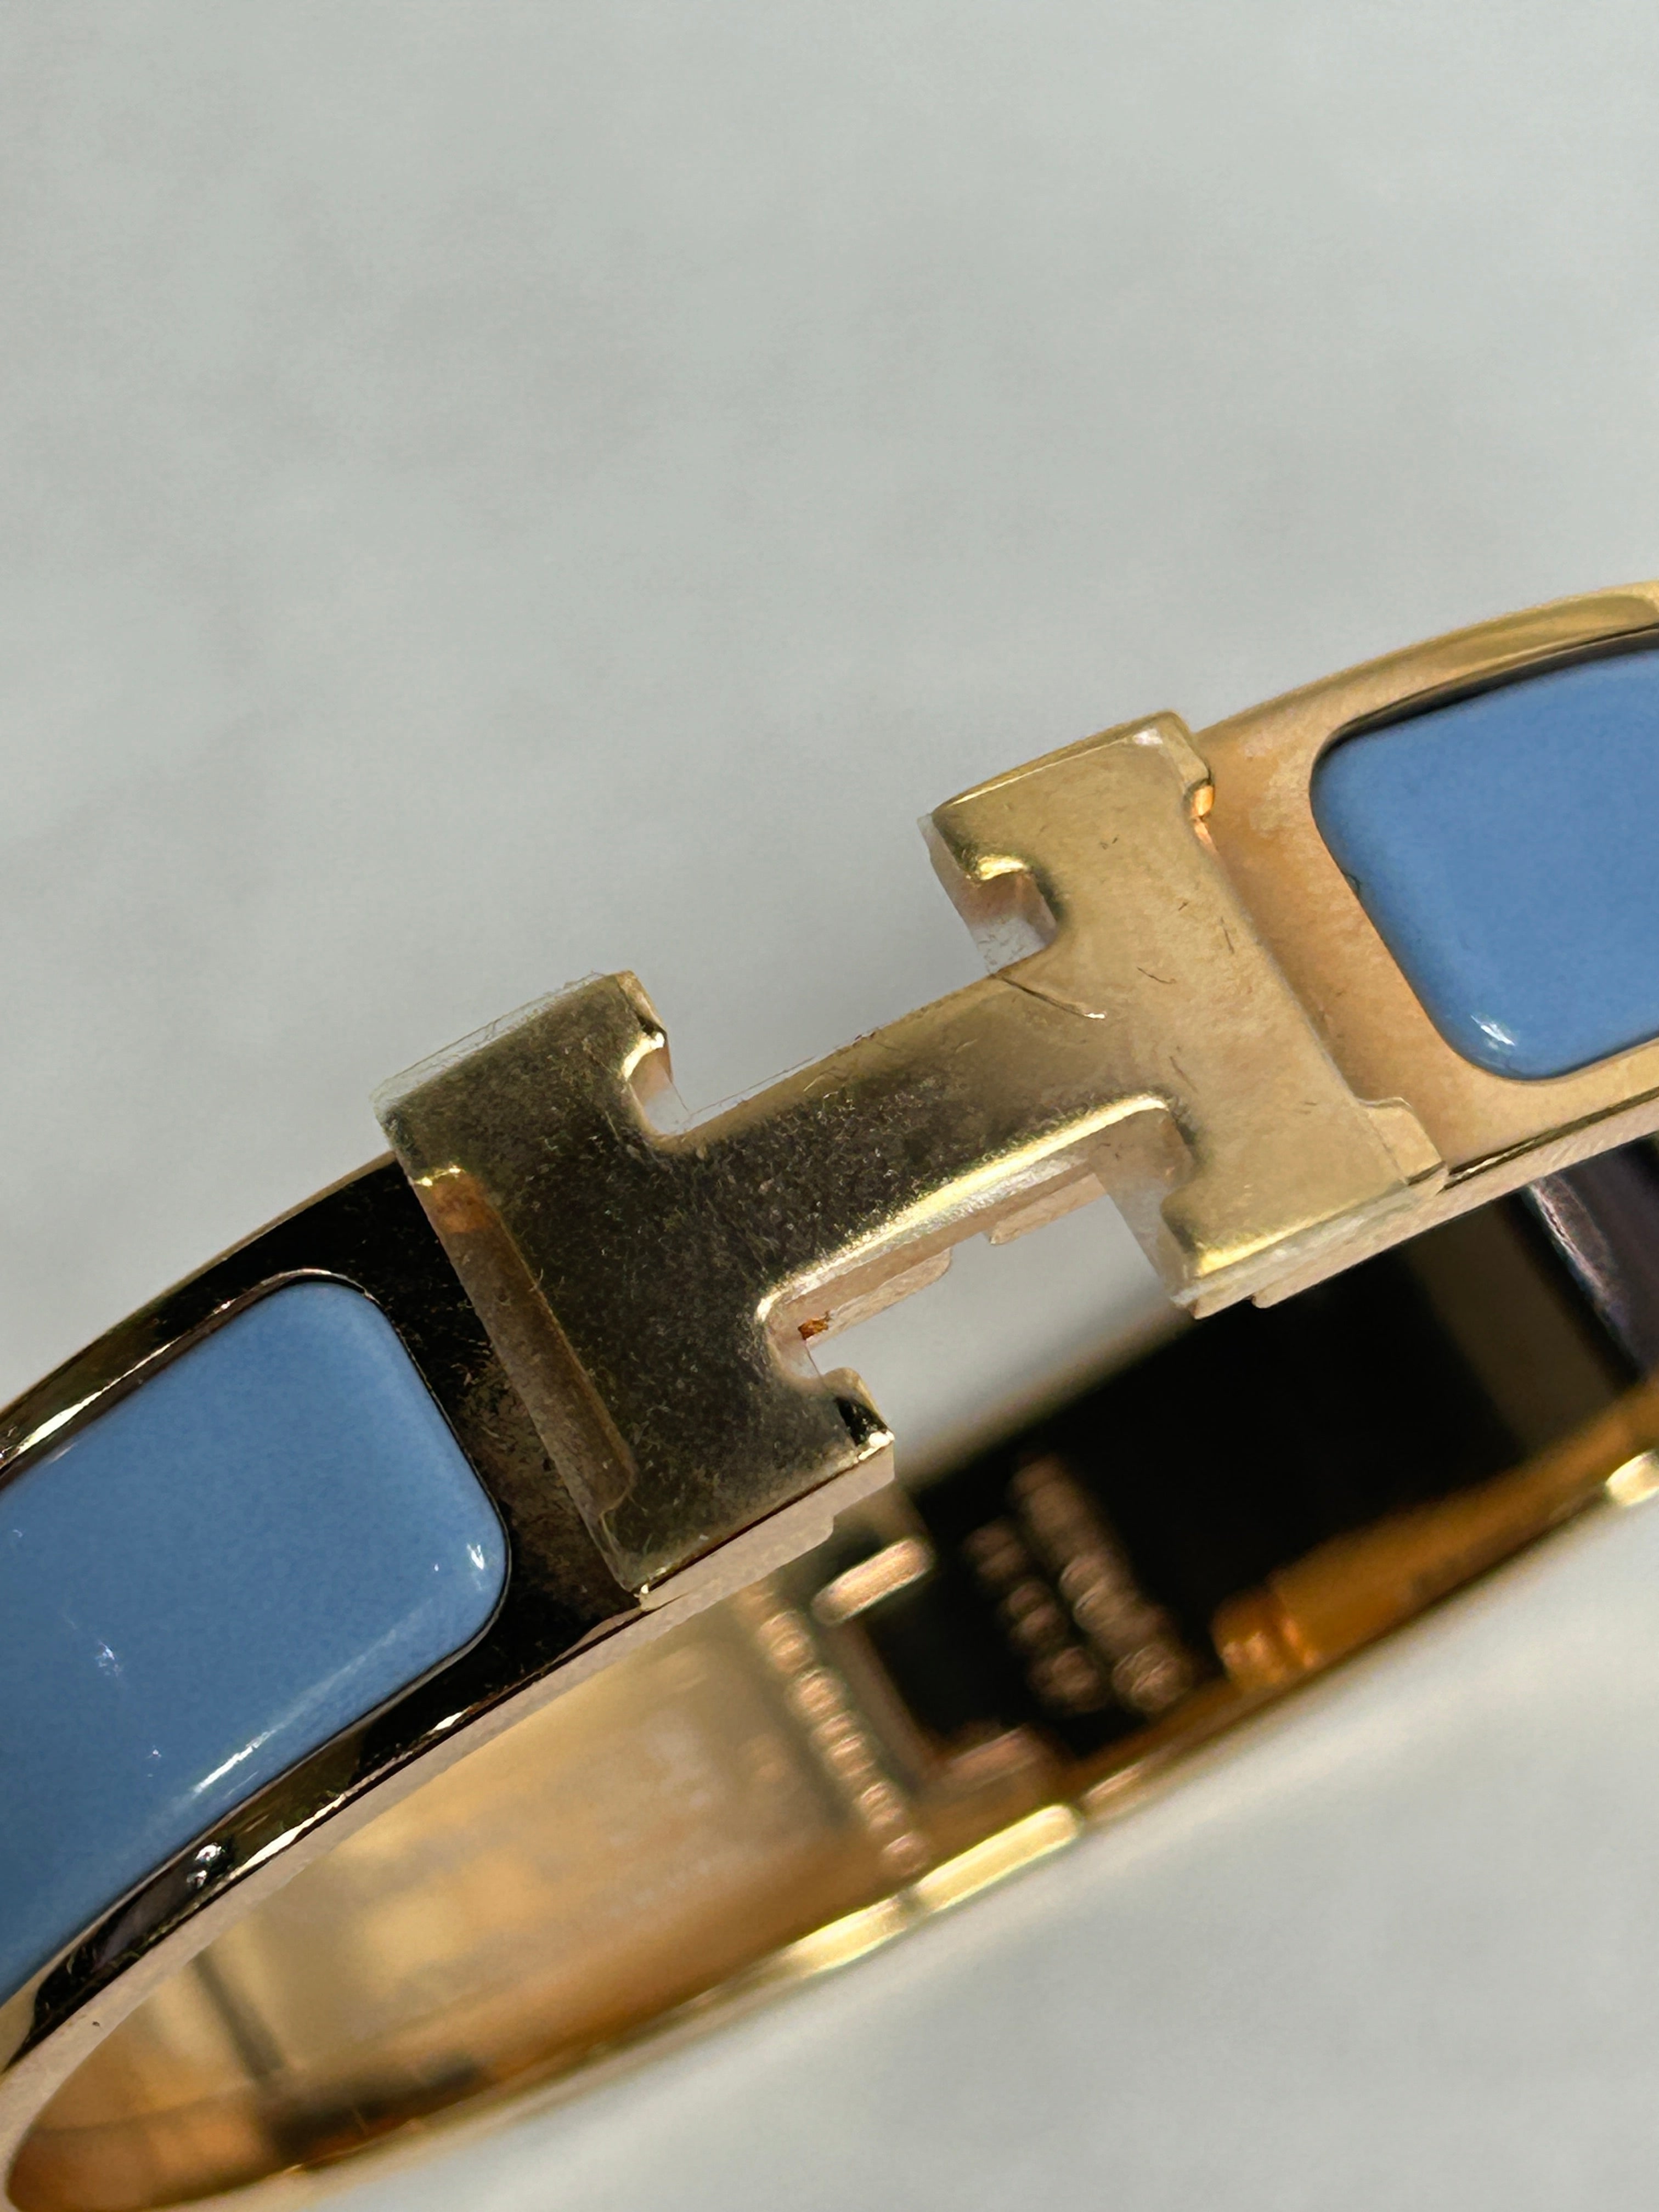 Bleu Chardon Enamel Rose Gold Clic H PM Bracelet